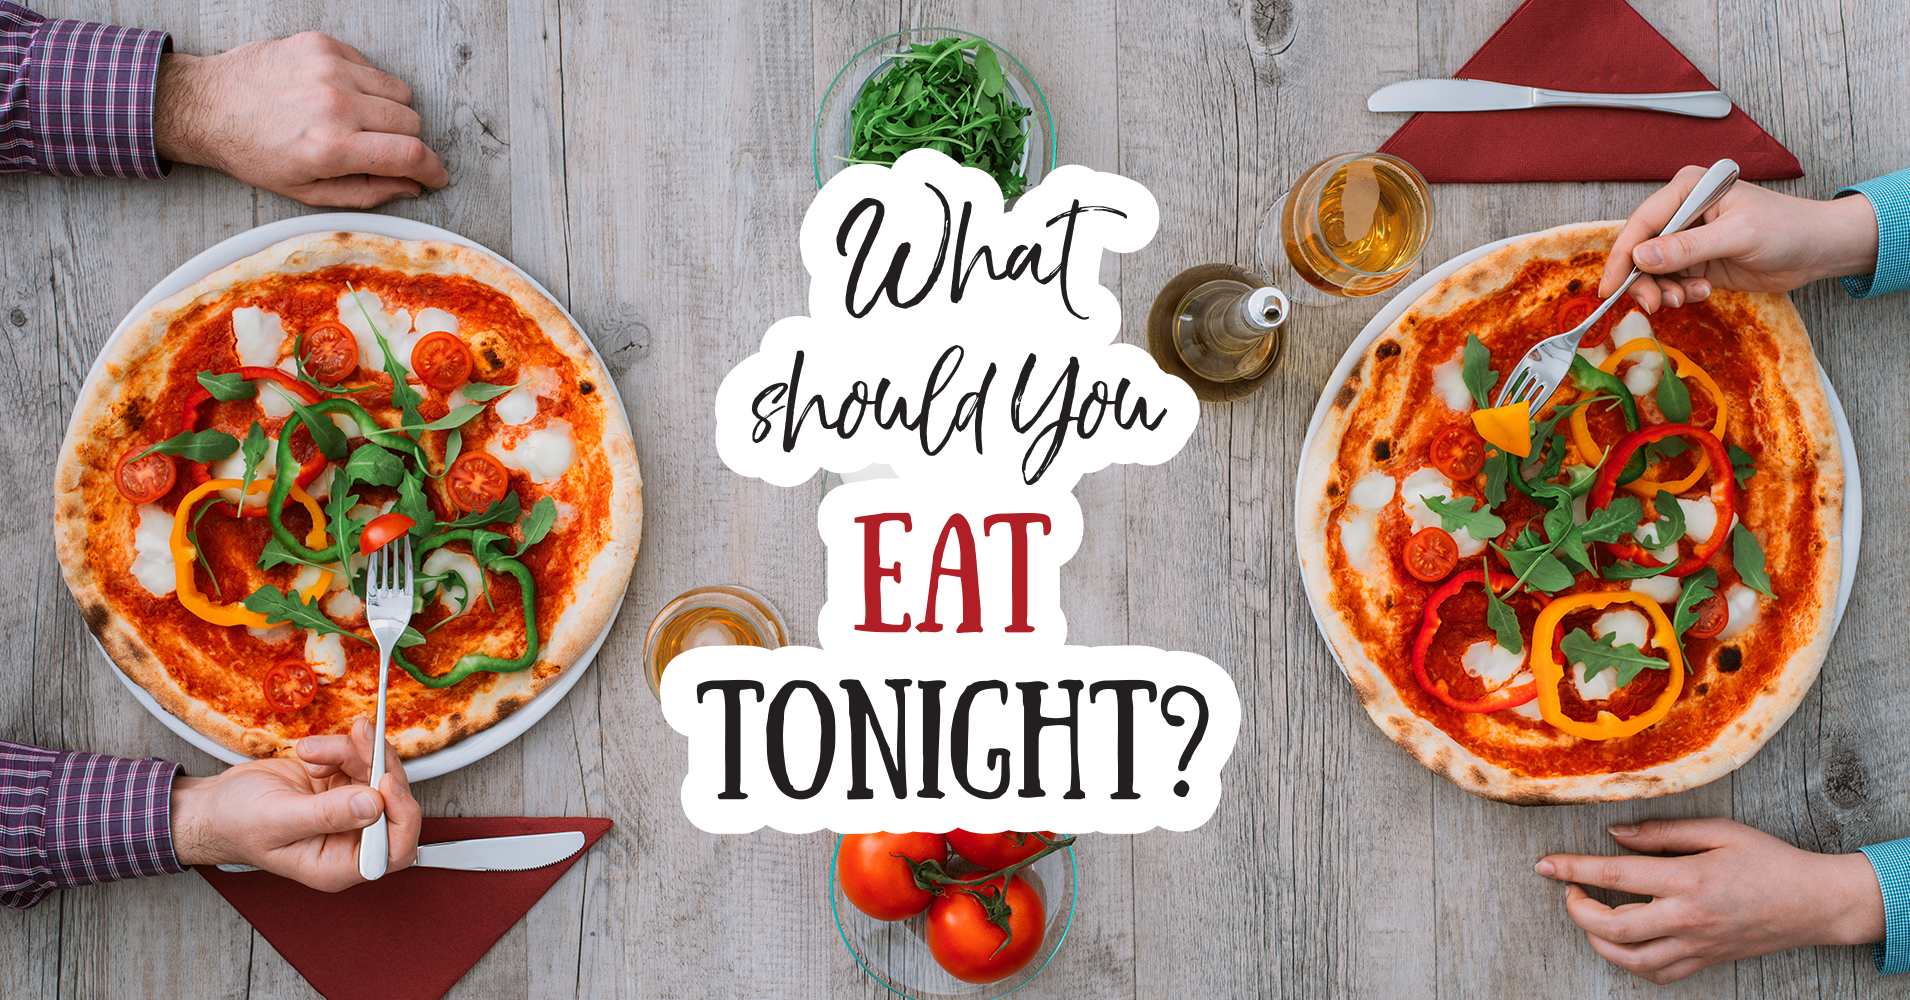 What Should You Eat Tonight? - Quiz - Quizony.com